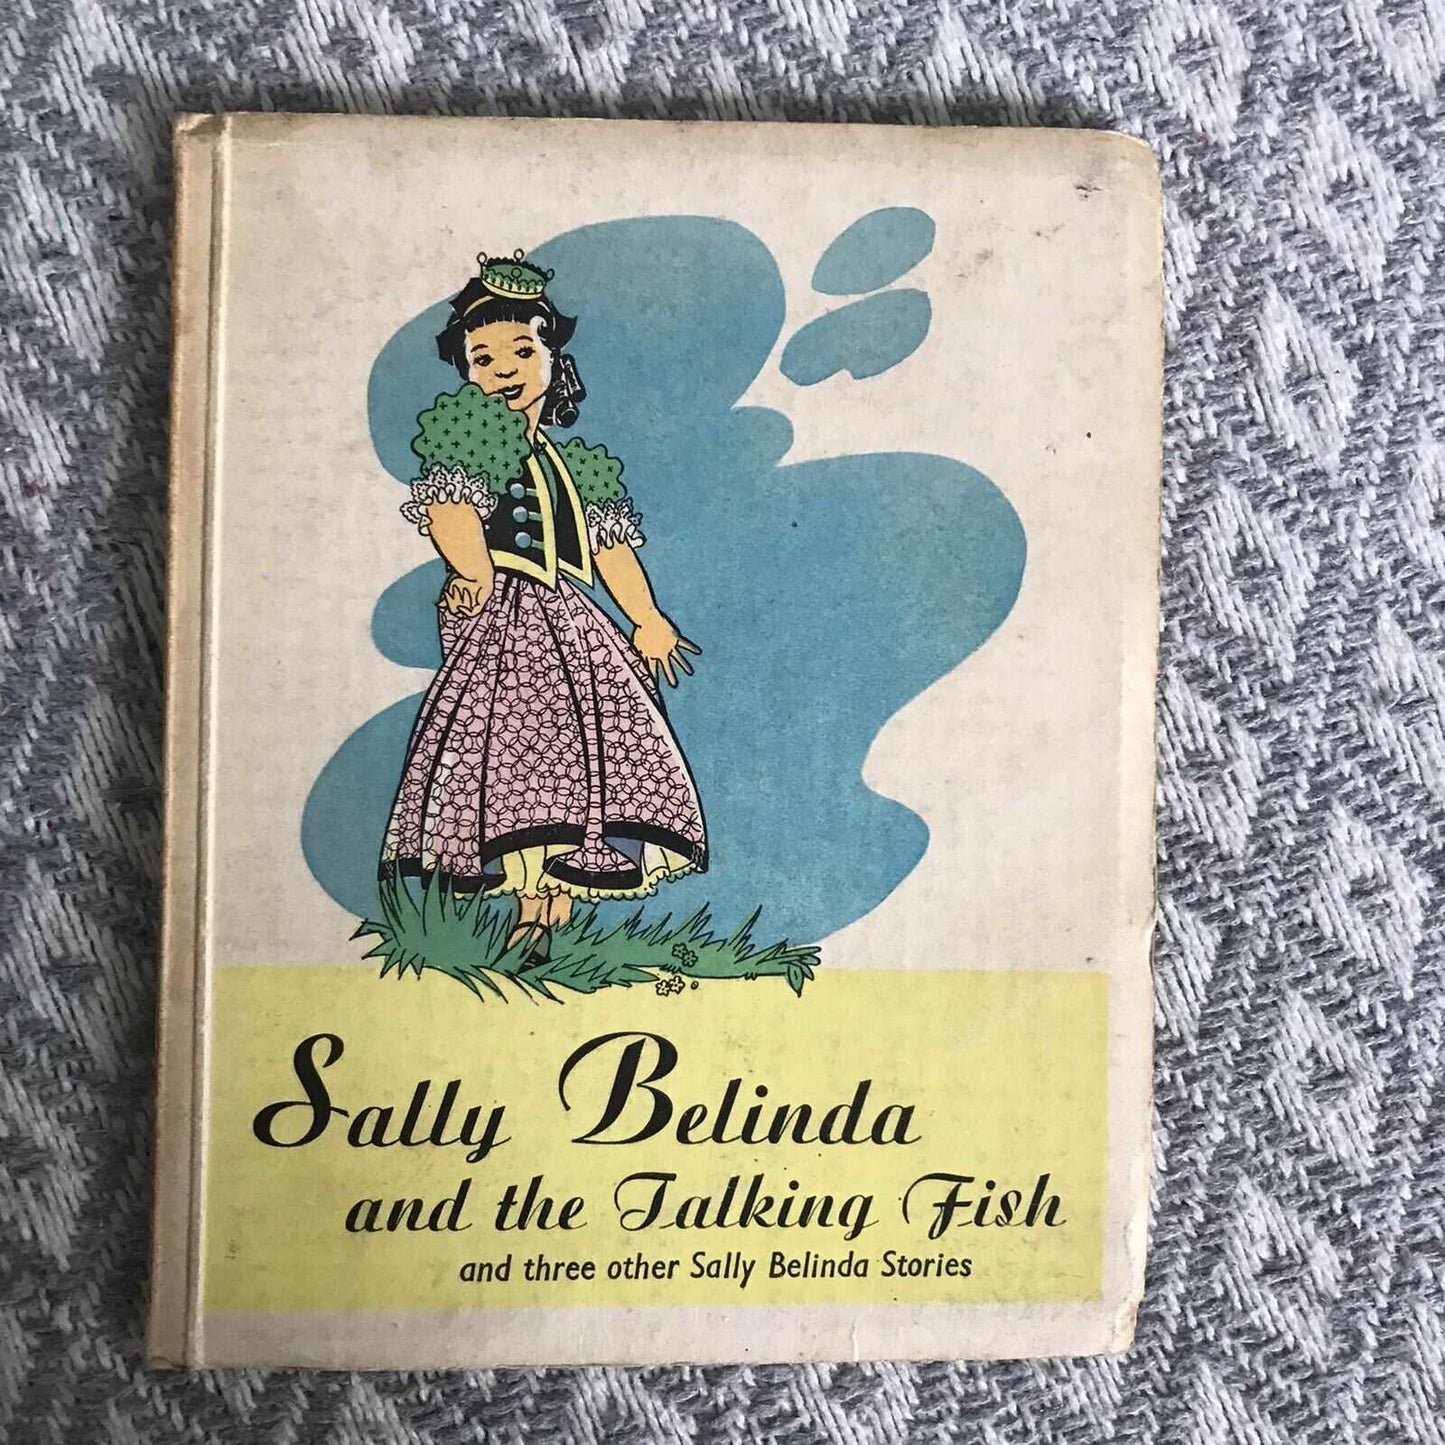 1930 Sally Belinda & The Talking Fish & Other Stories - Max Crombie(Jonathan Sco Honeyburn Books (UK)